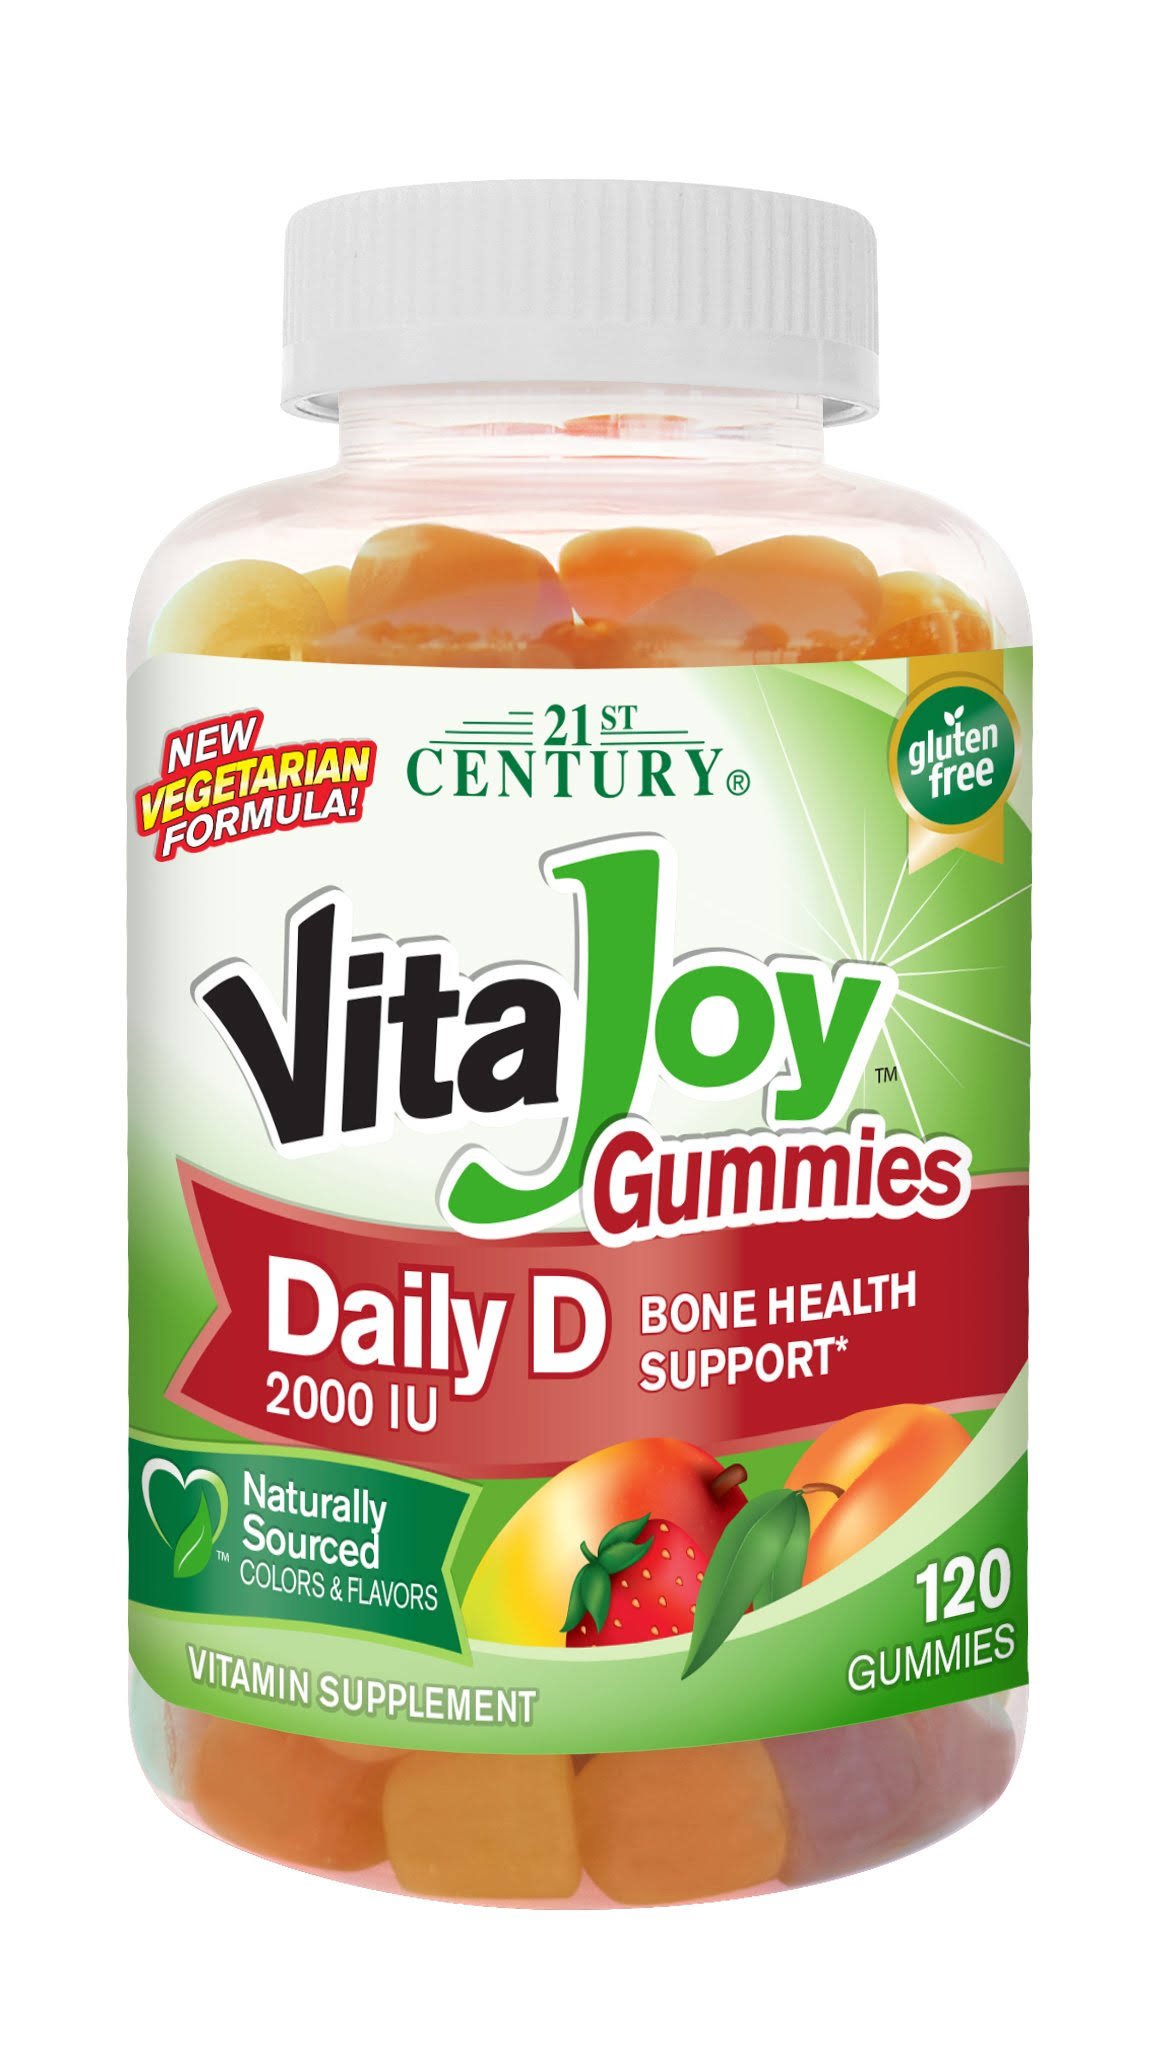 21st Century Vitajoy Daily D Vitamin Supplement - Peach, Mango and Strawberry, 120 Gummies